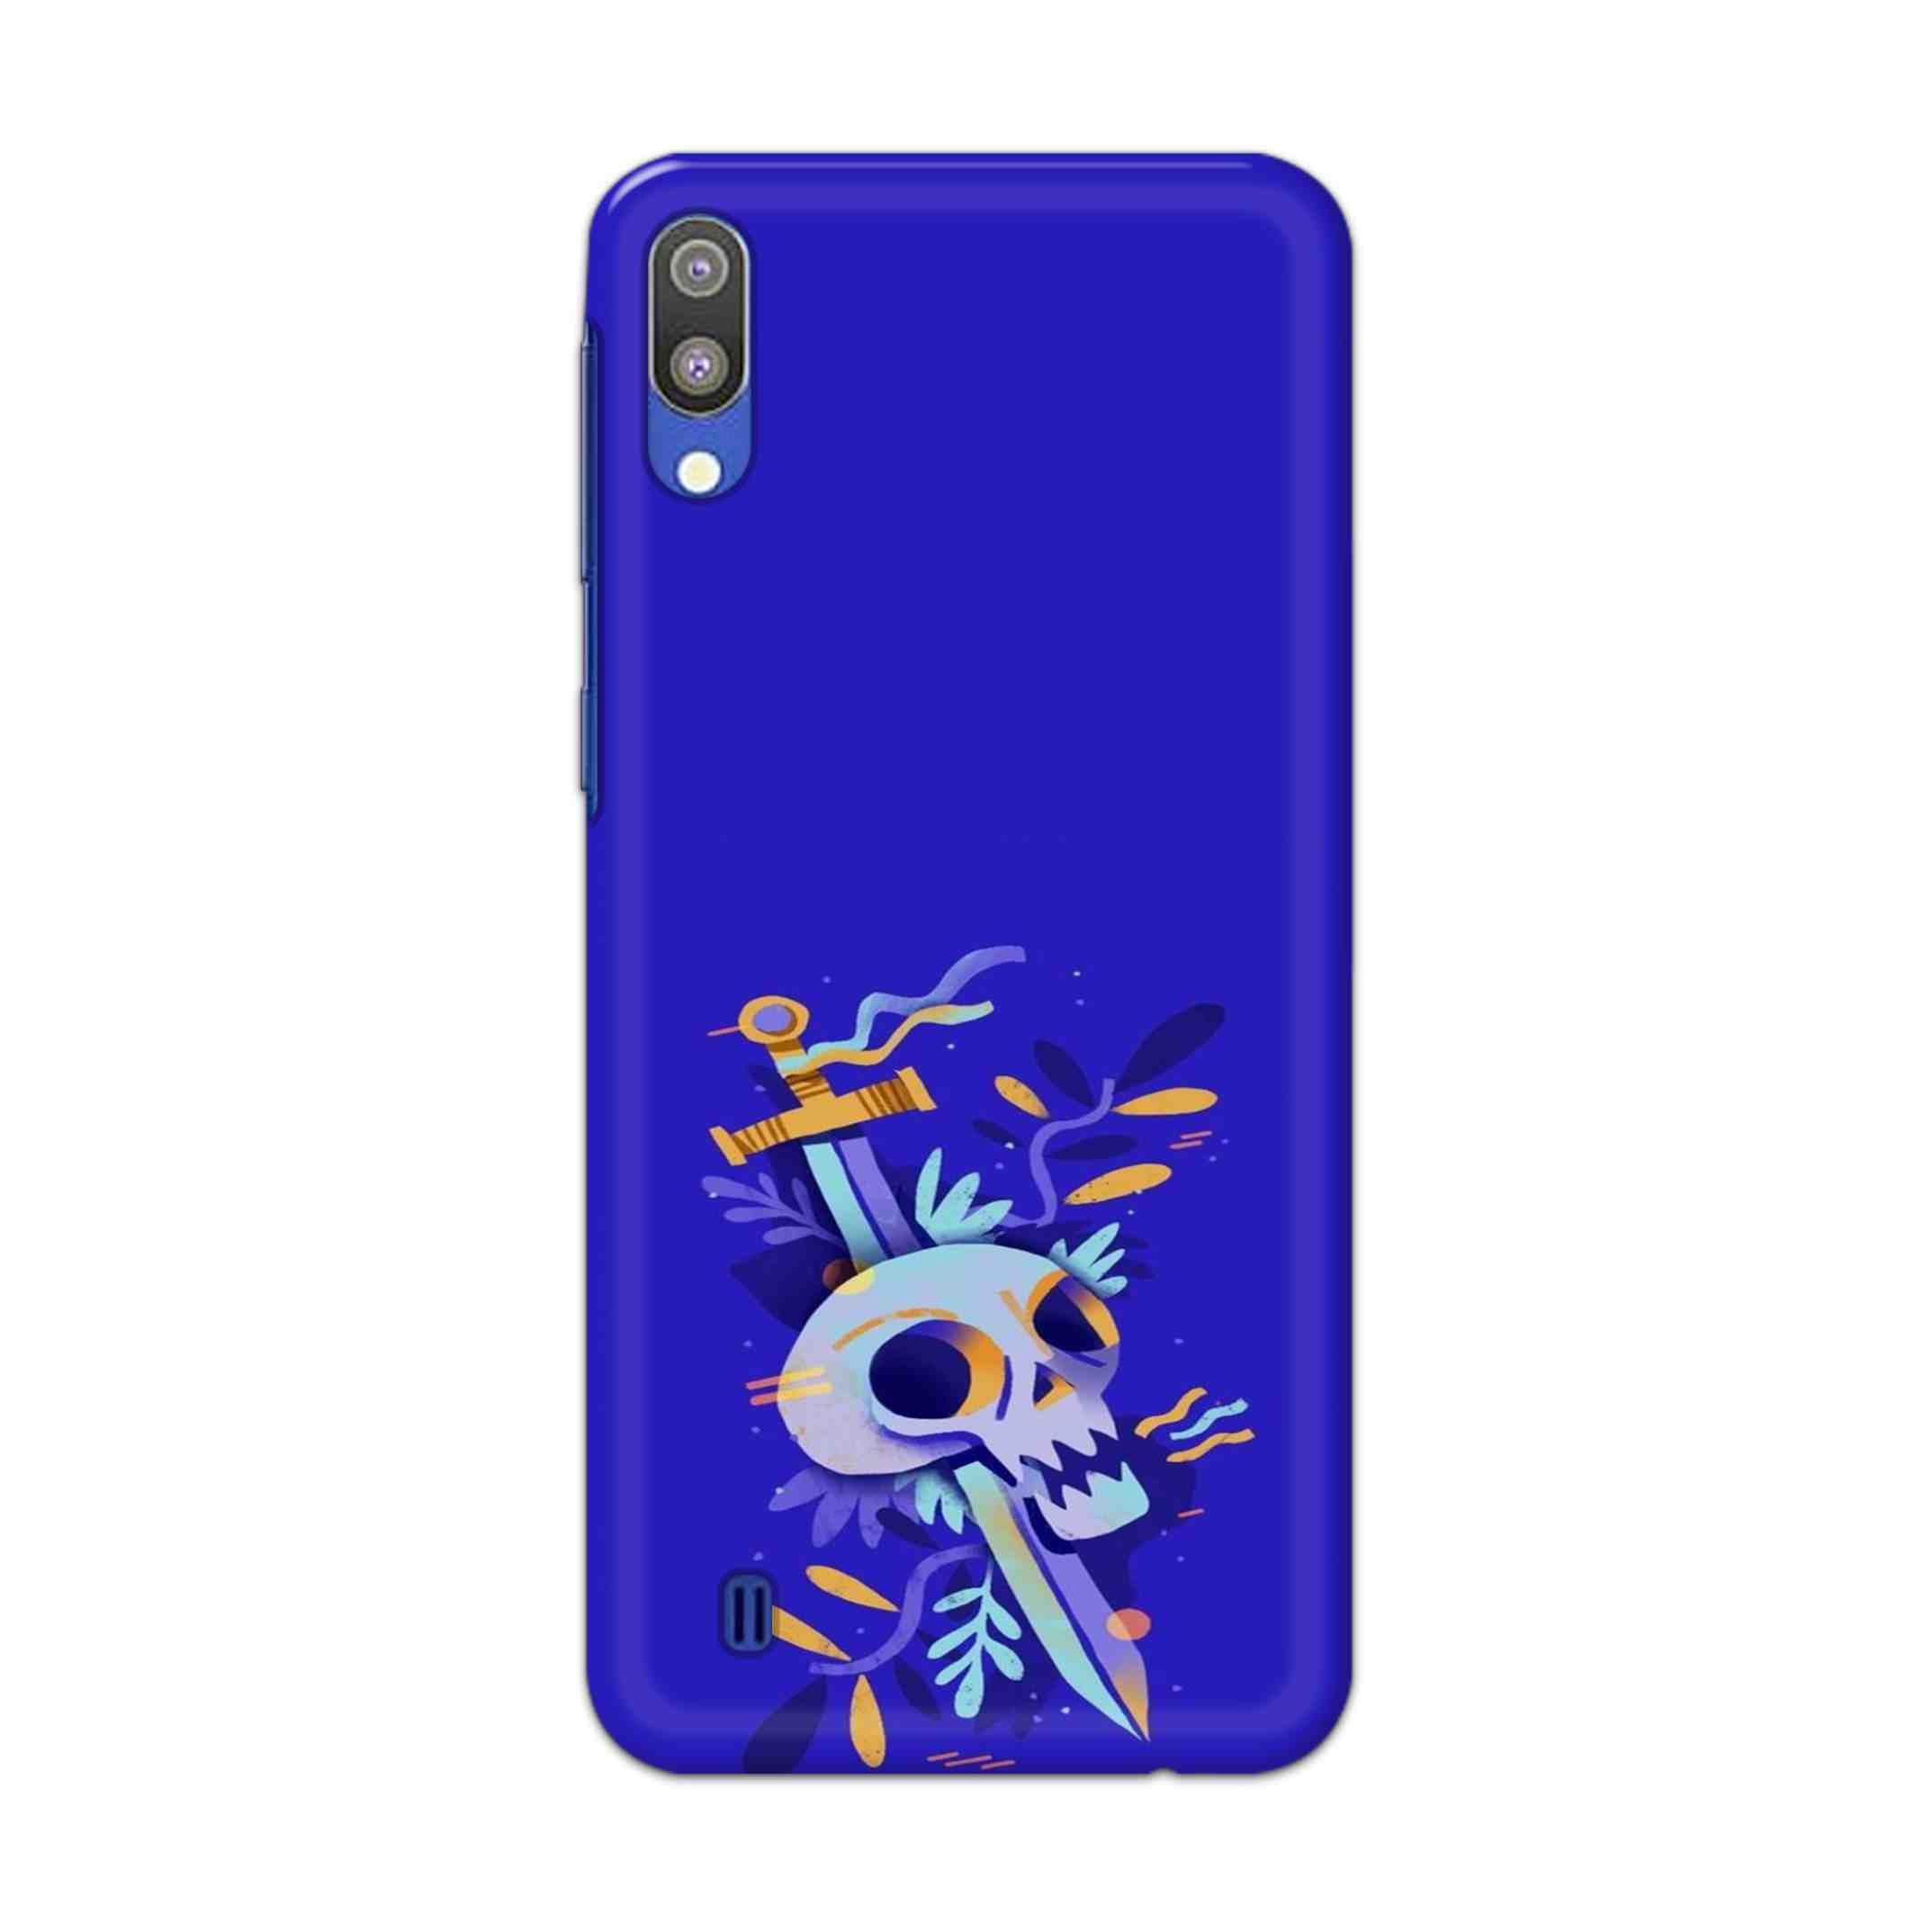 Buy Blue Skull Hard Back Mobile Phone Case Cover For Samsung Galaxy M10 Online